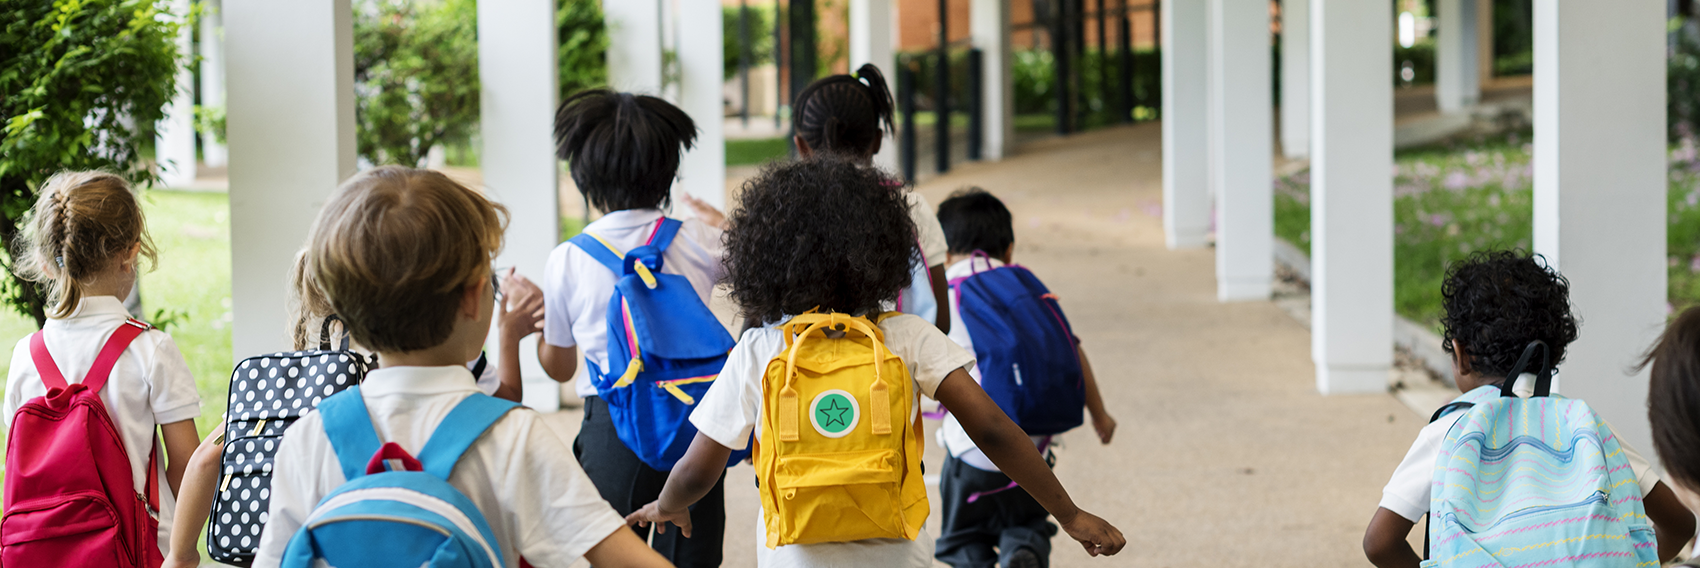 children in colored backpacks running toward school - Rediker Software hero image